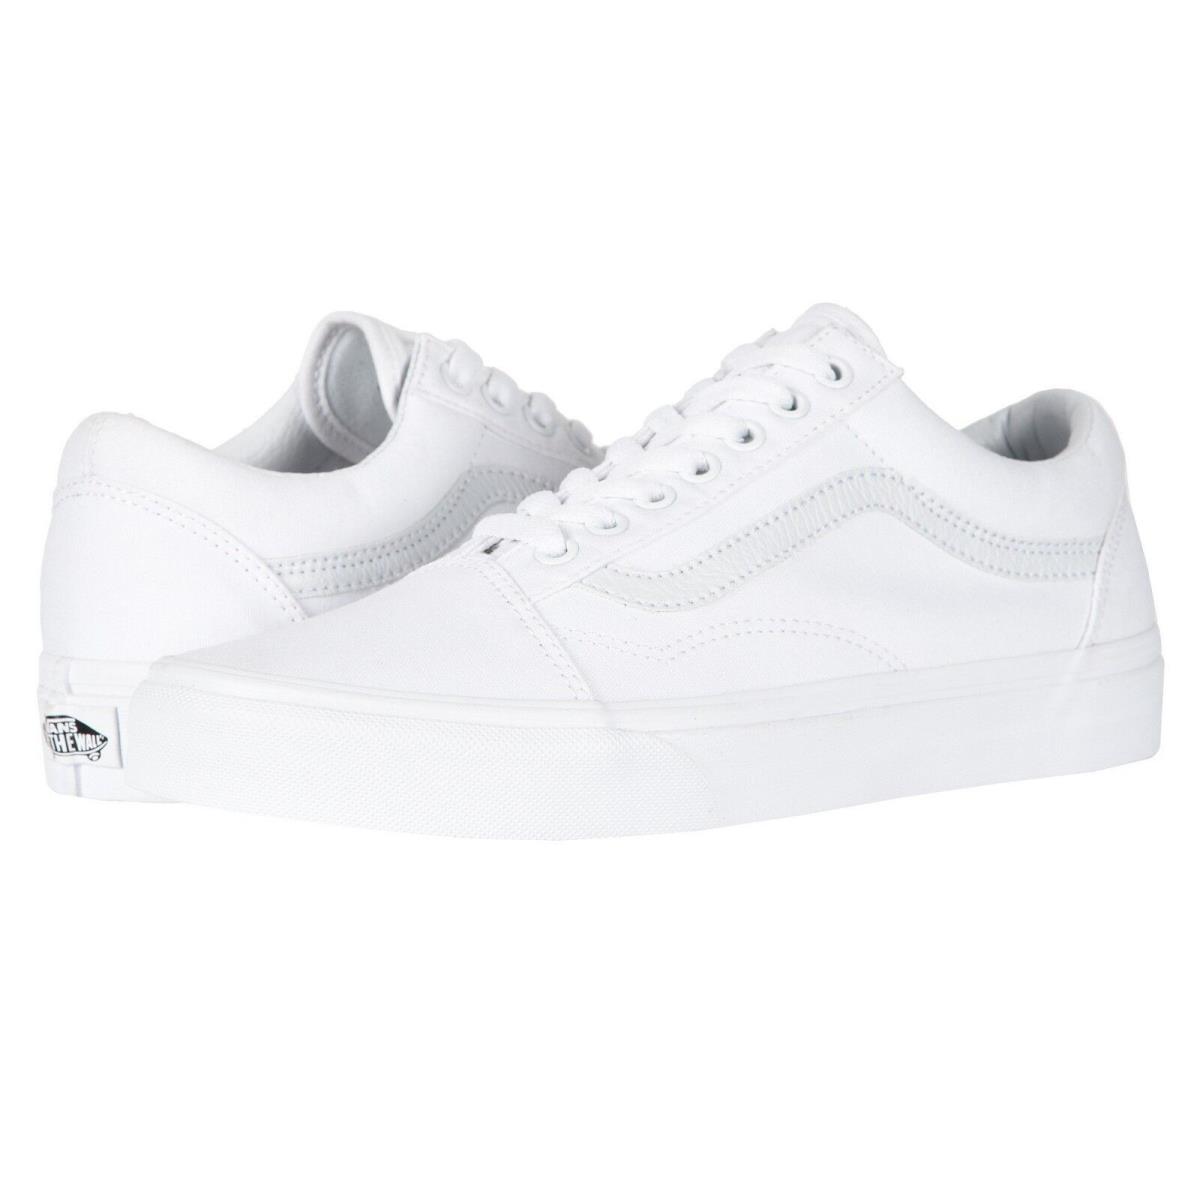 Vans Old Skool Skateboard Classic Black White Mens Womens Sneakers Tennis Shoes White